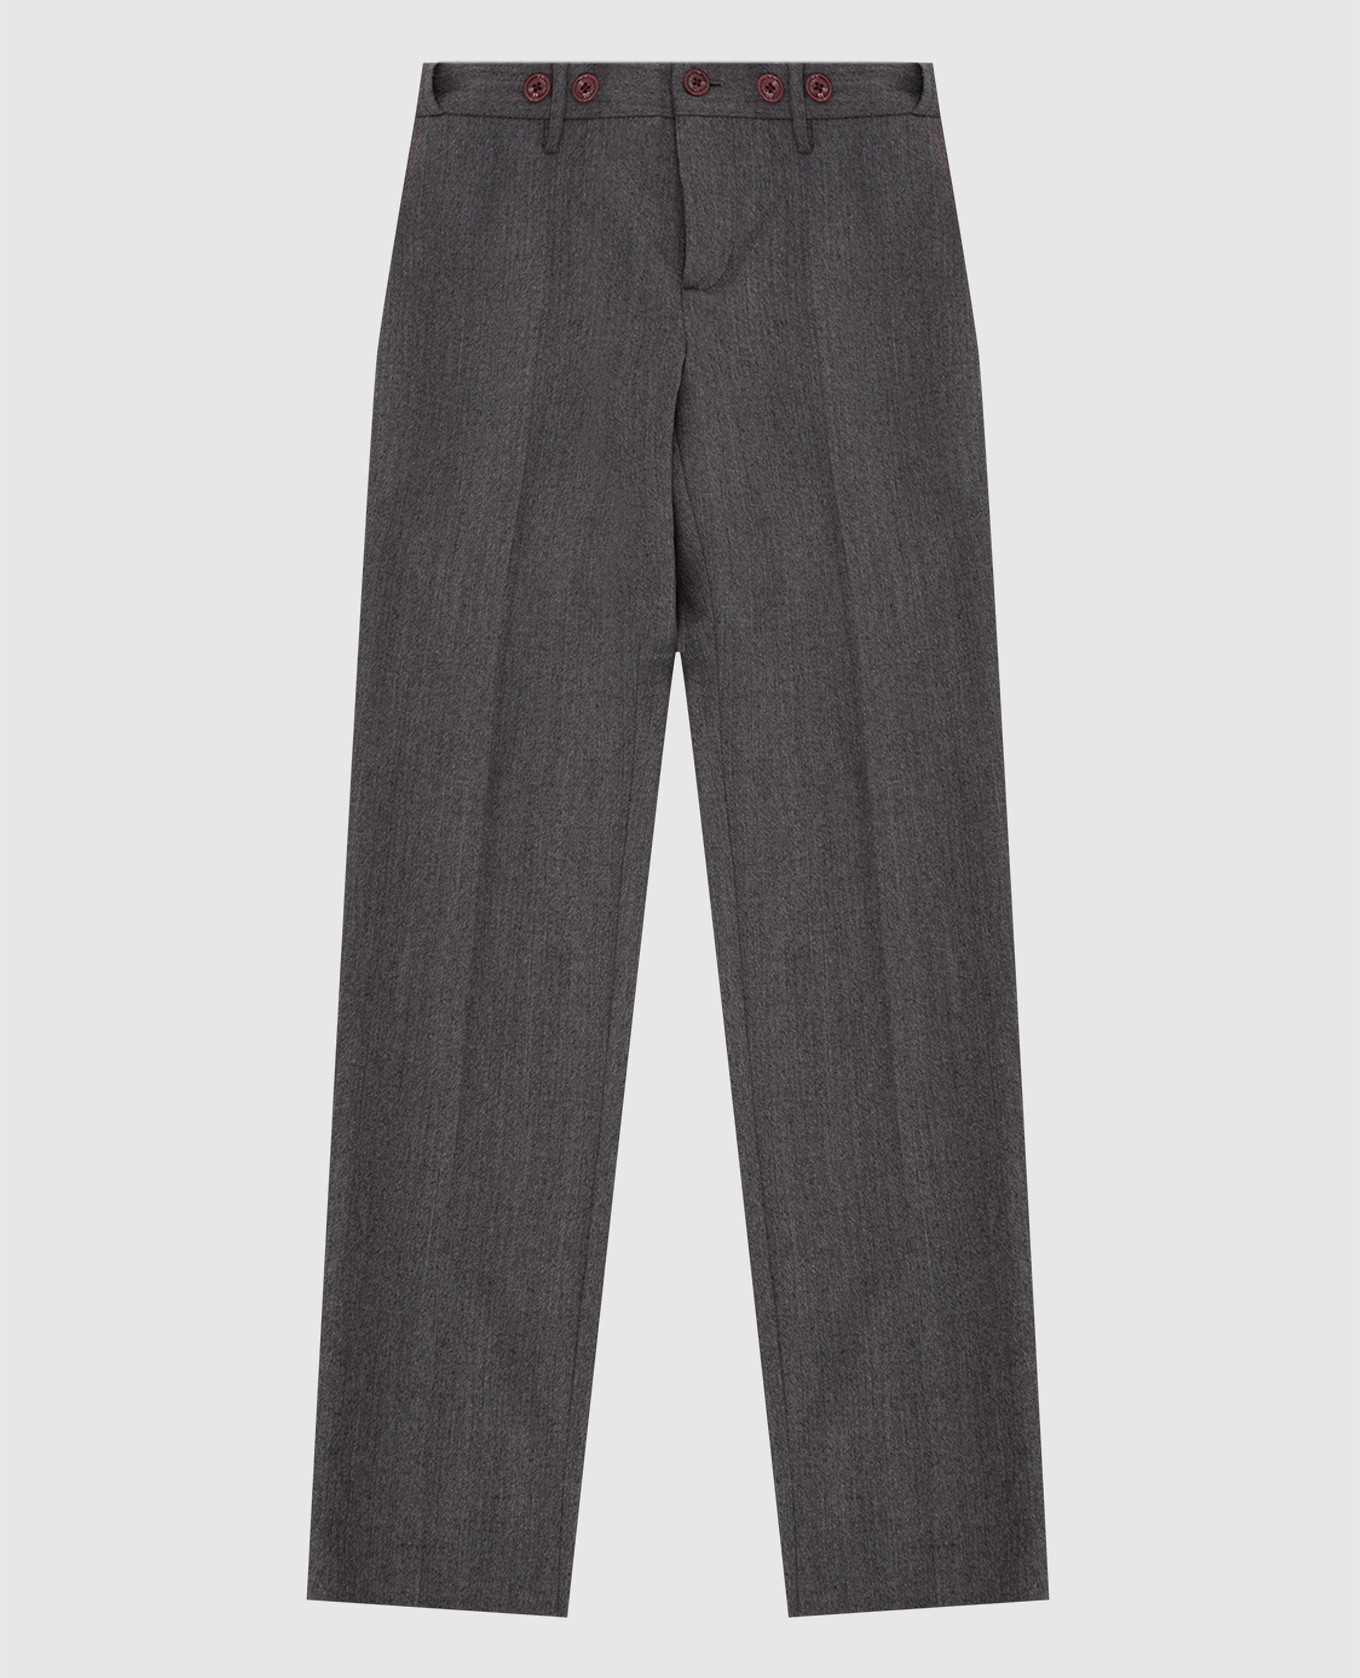 Children's gray wool trousers